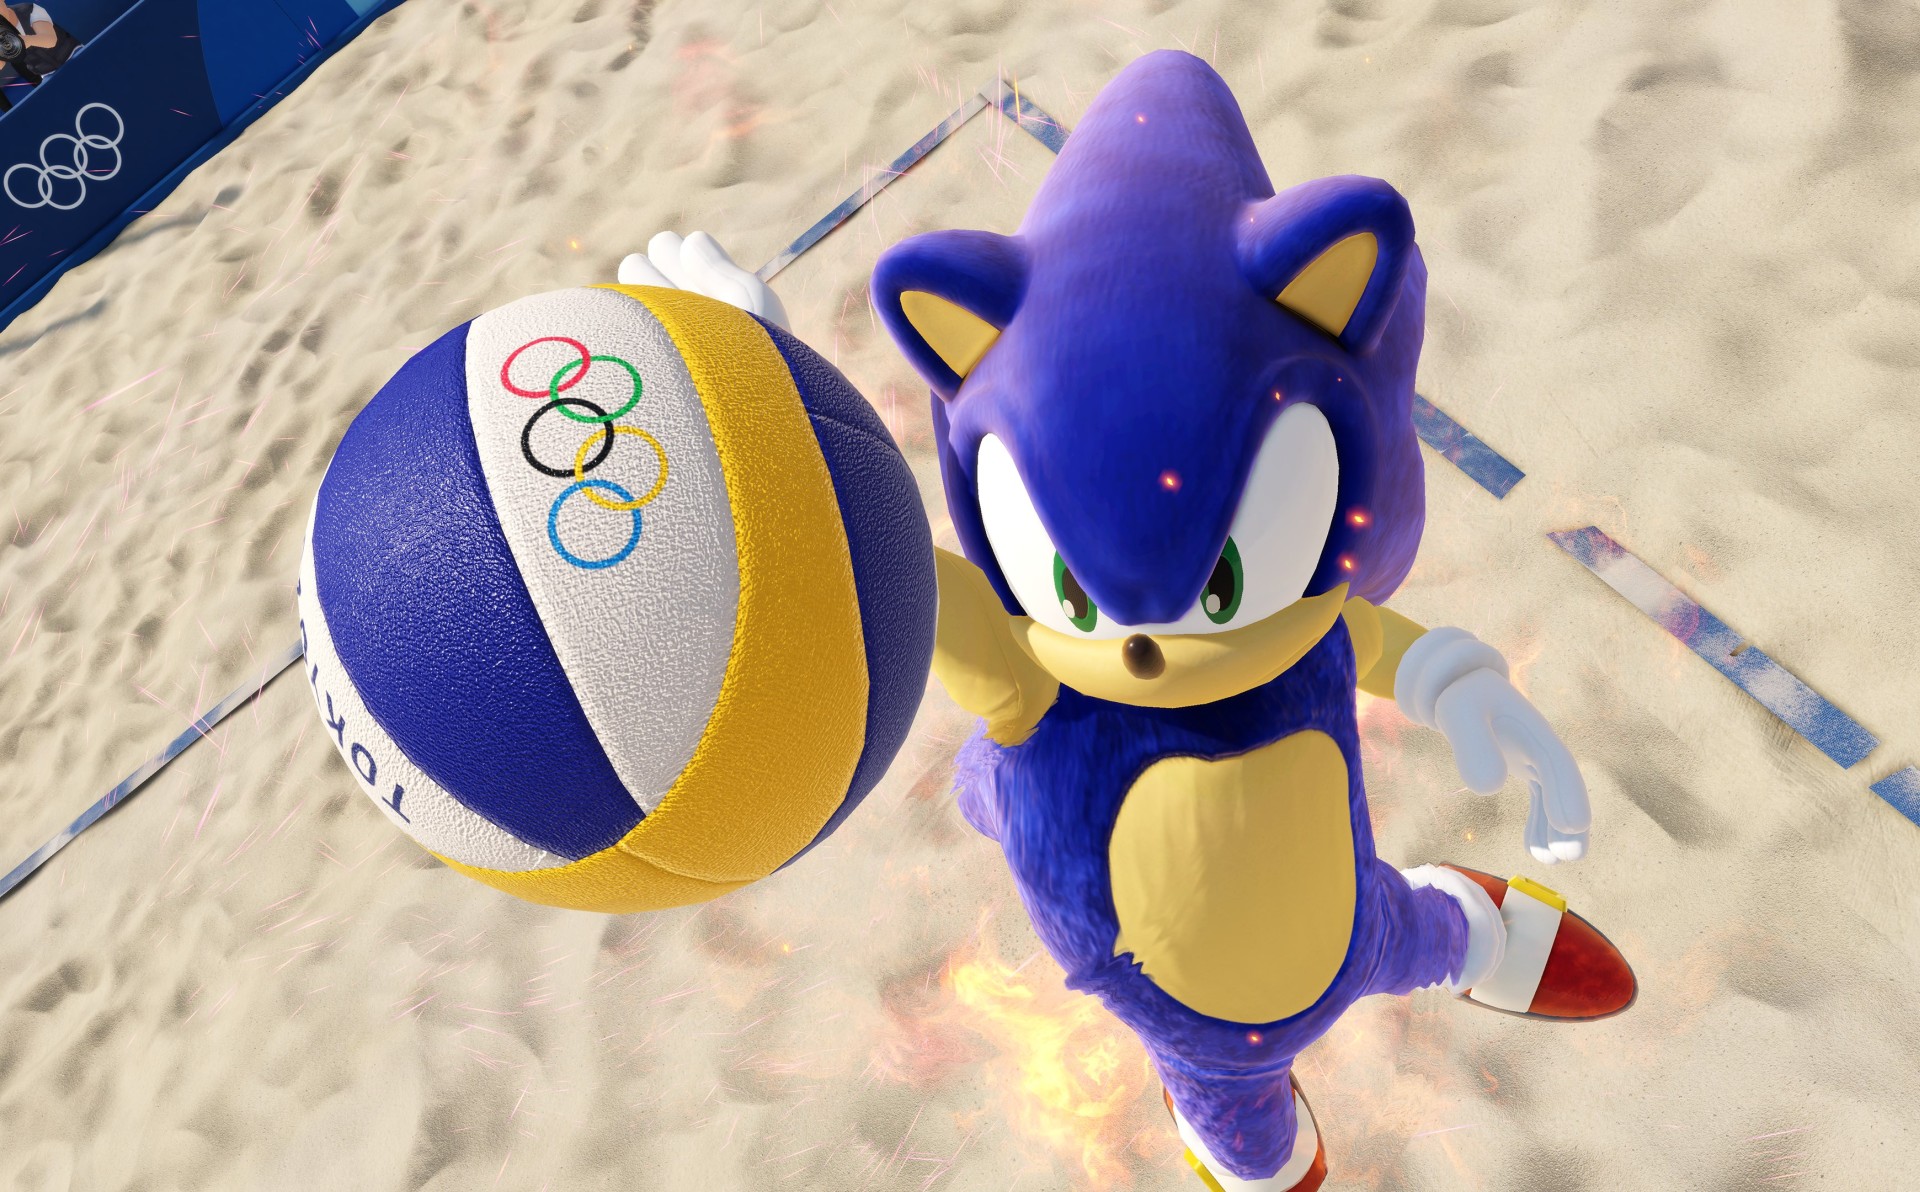 Next Week on Xbox: Neue Spiele vom 21. bis 25. Juni: Olympic Games Tokyo 2020 - The Official Video Game